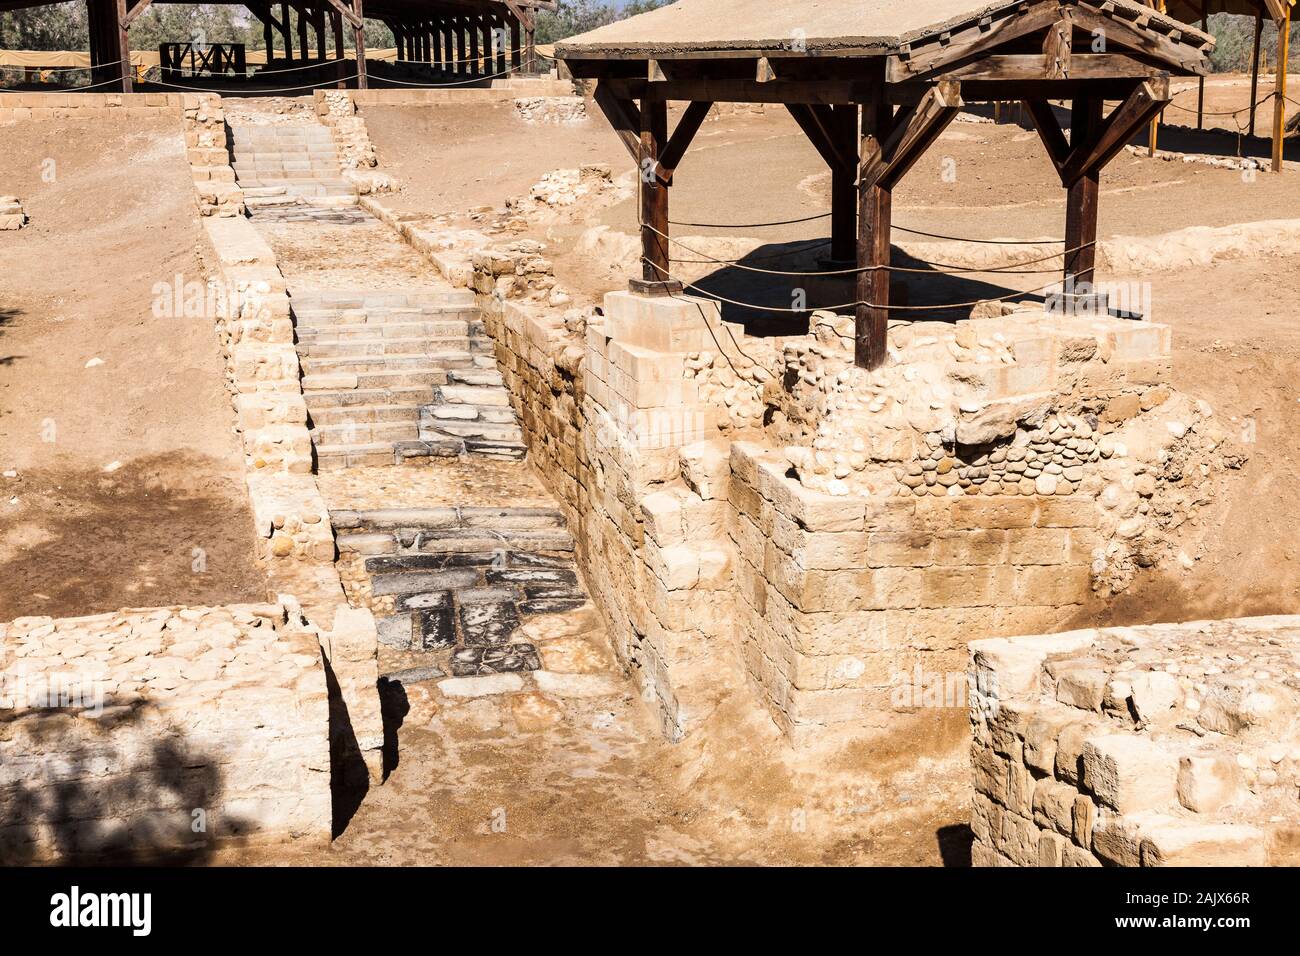 Bethany, Baptism Site of Jesus, excavation branch, Jordan River, Jordan, middle east, Asia Stock Photo